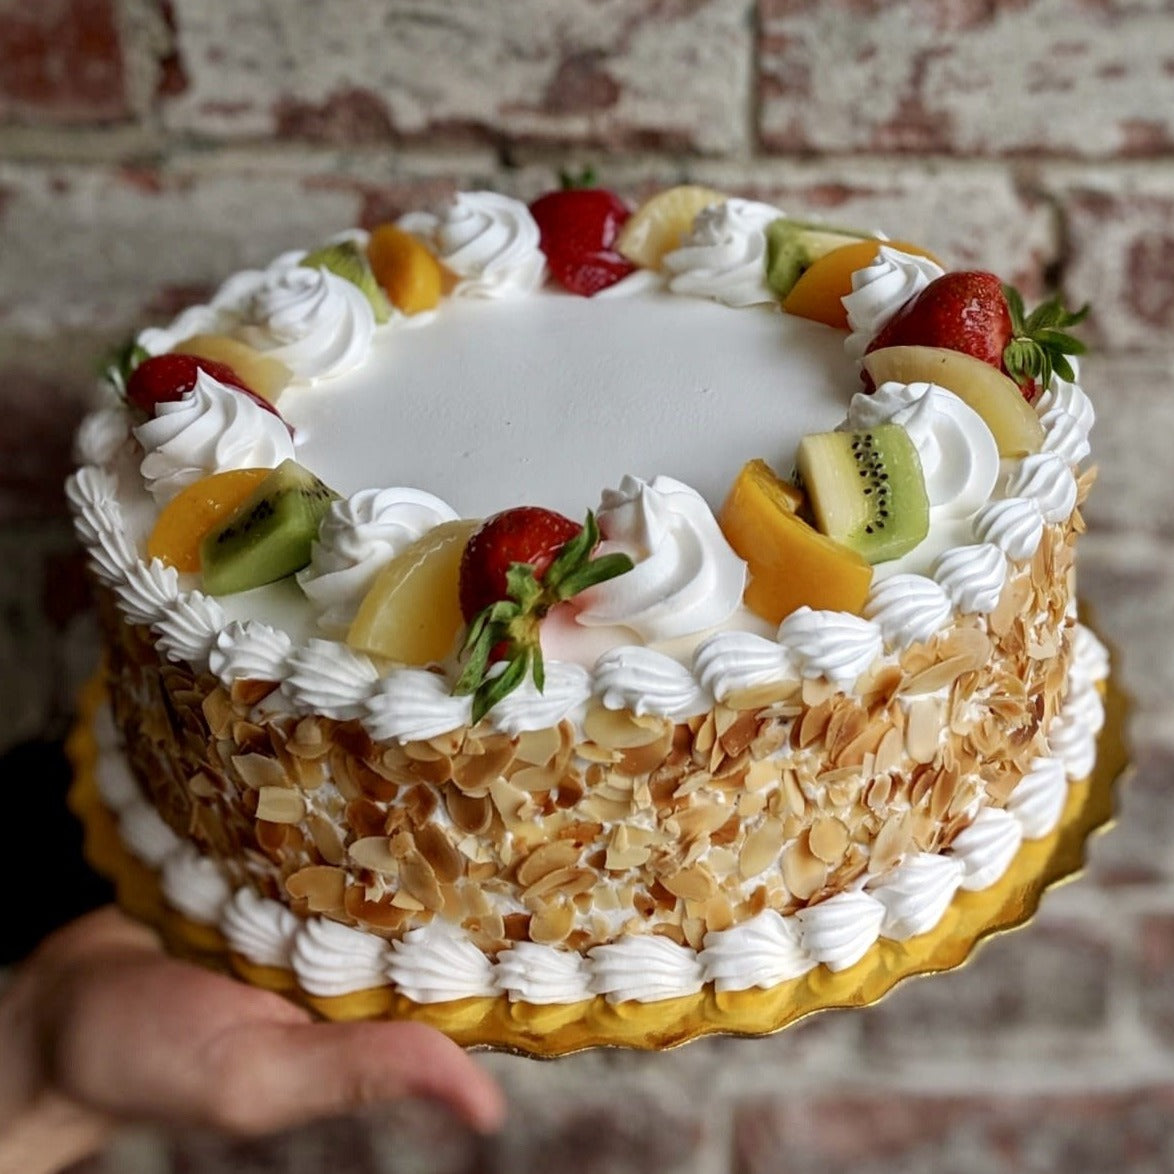 Tutta frutta cake with fresh fruit on top